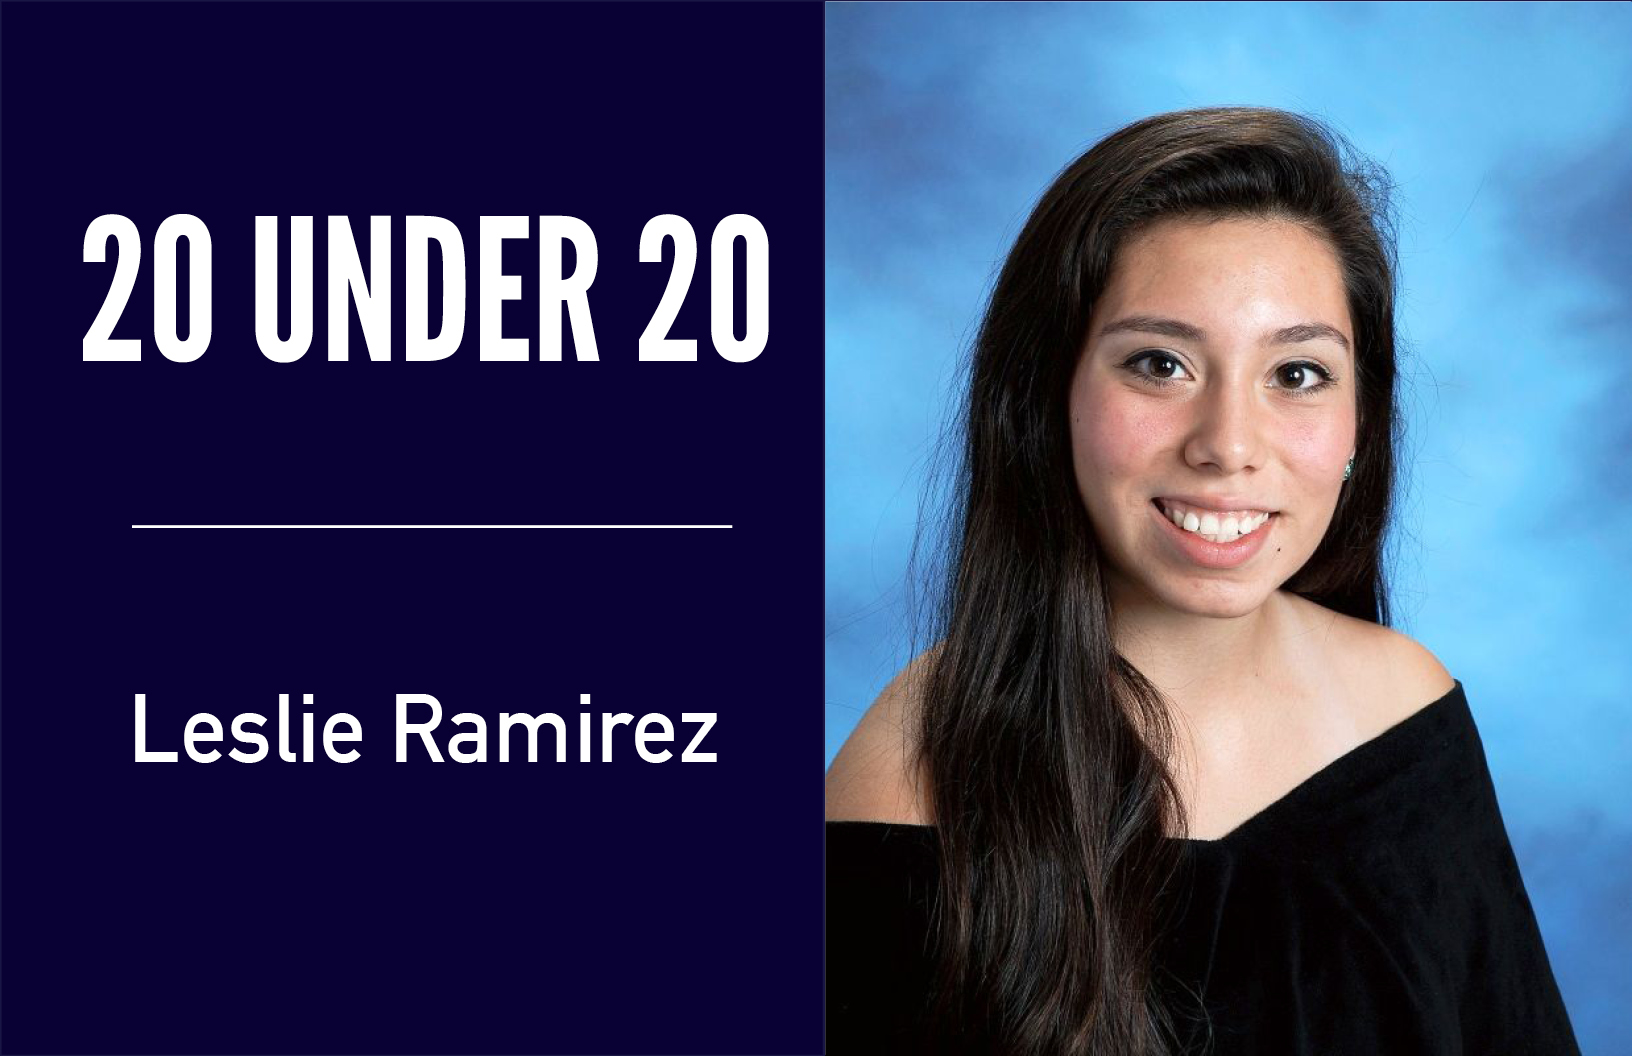 Leslie-Ramirez-20-under-20